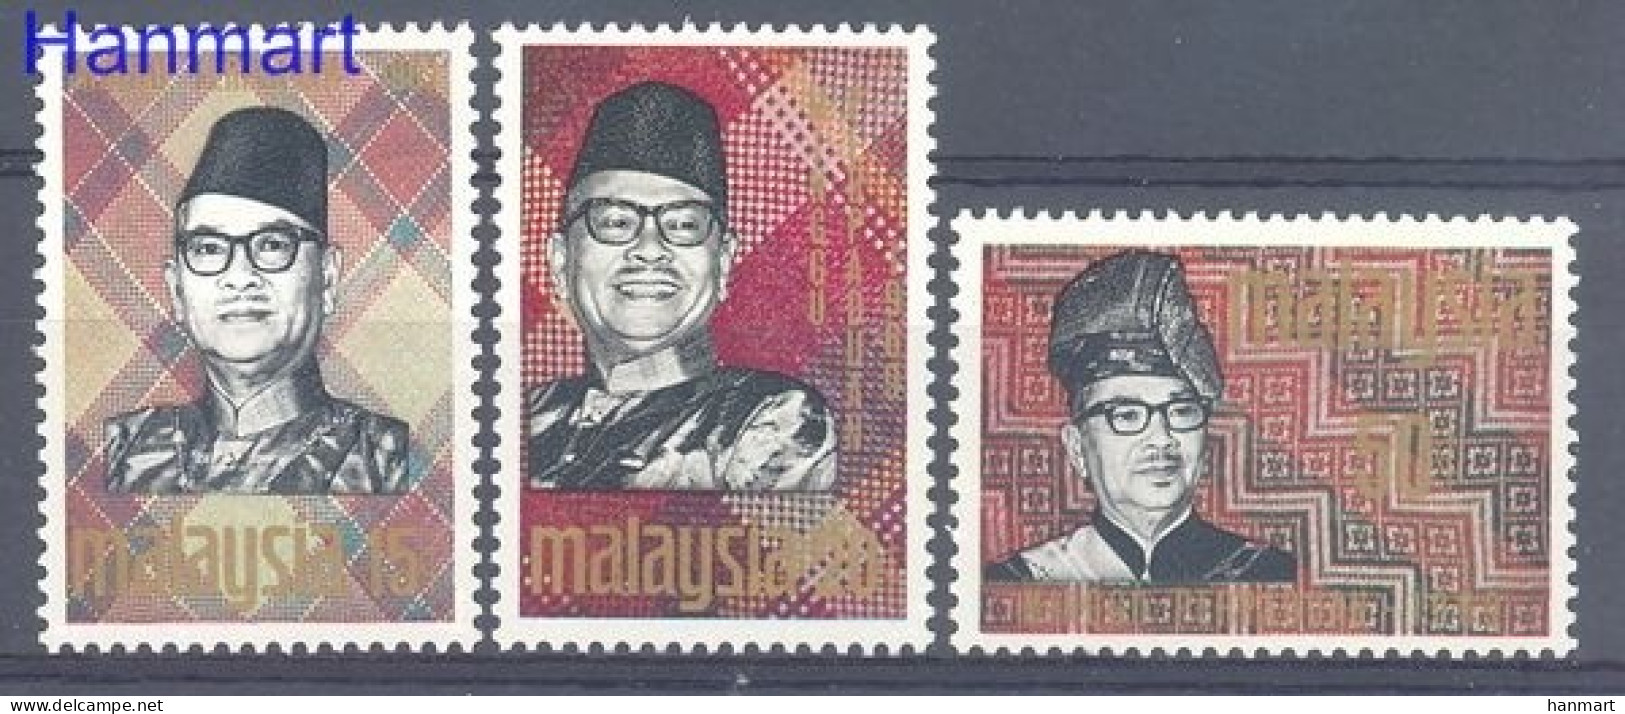 Malaysia 1969 Mi 55-57 MNH  (ZS8 MLY55-57) - Familles Royales